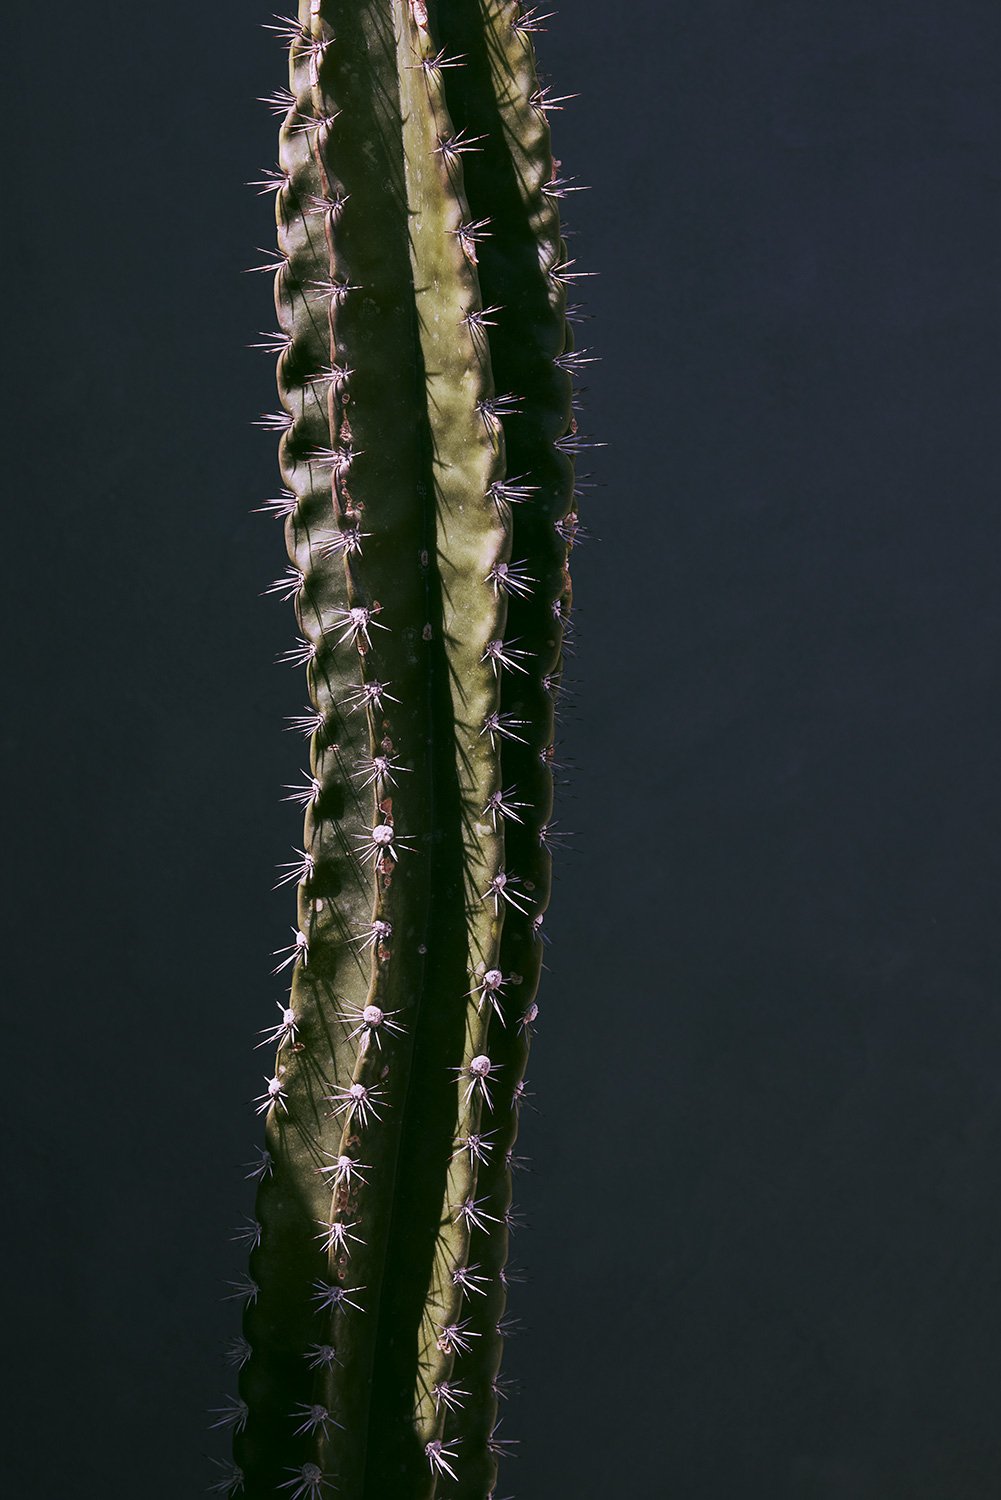 kristin-teig-cactus-4188.jpg